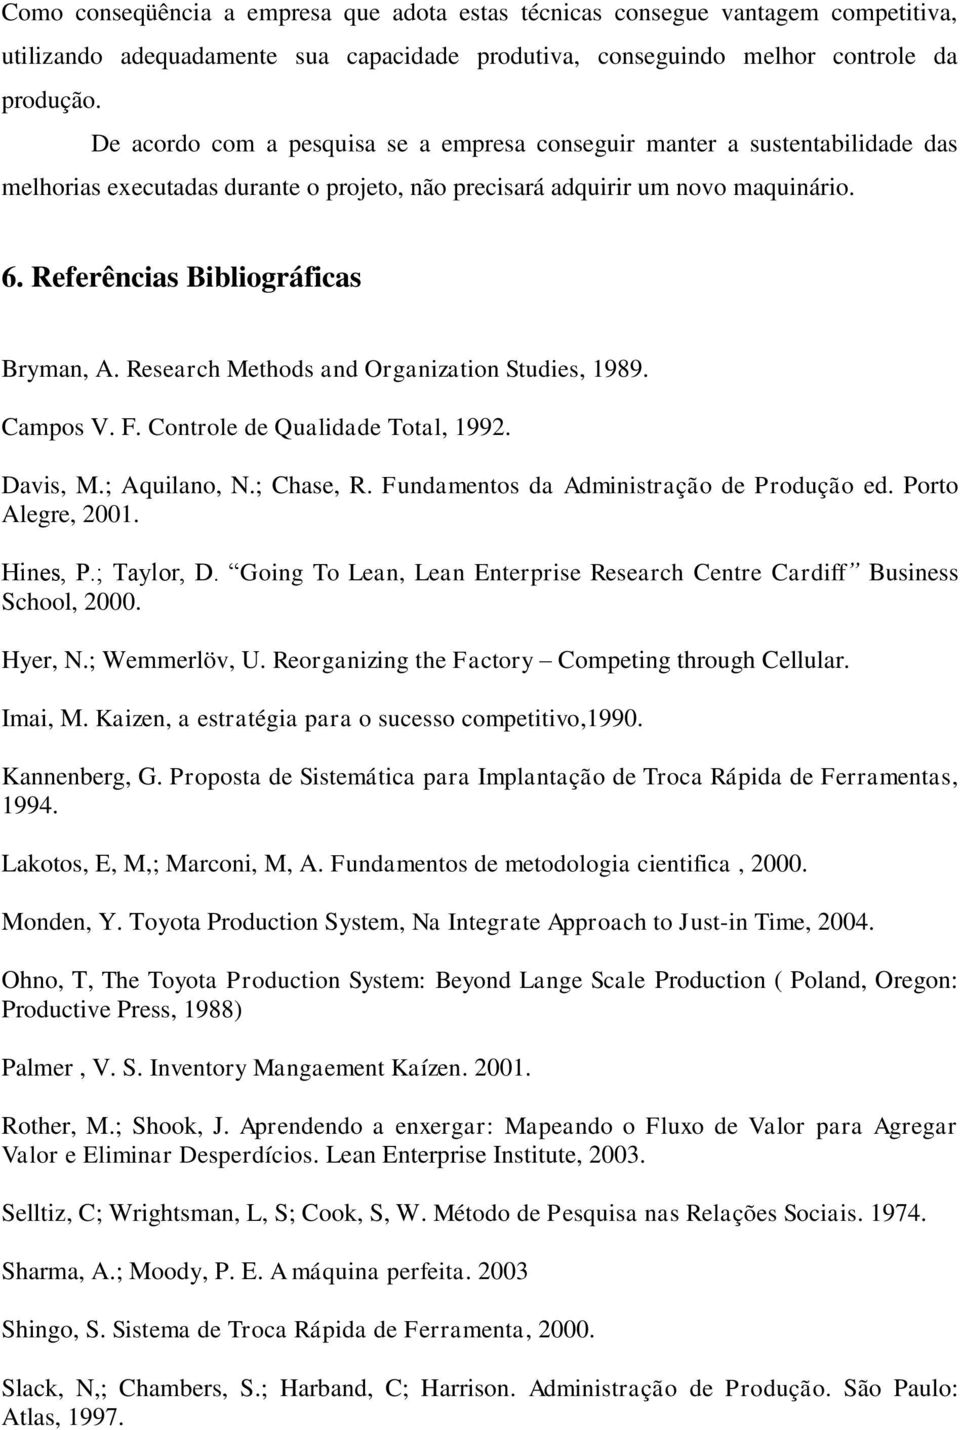 Referências Bibliográficas Bryman, A. Research Methods and Organization Studies, 1989. Campos V. F. Controle de Qualidade Total, 1992. Davis, M.; Aquilano, N.; Chase, R.